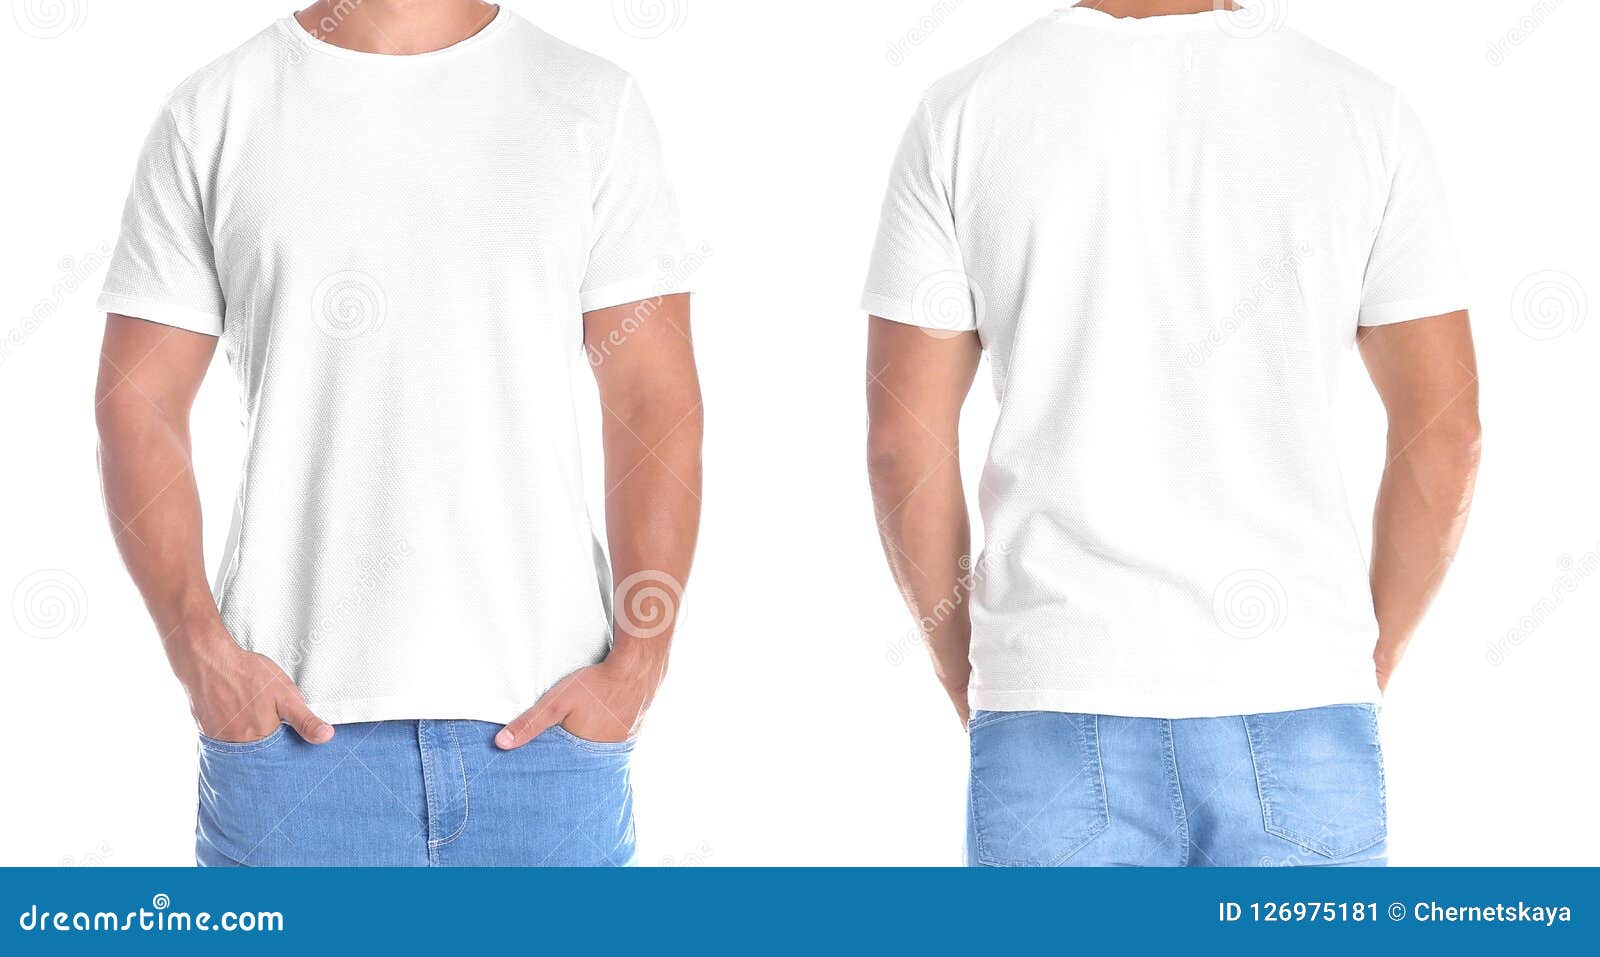 plain white shirt for men front and back